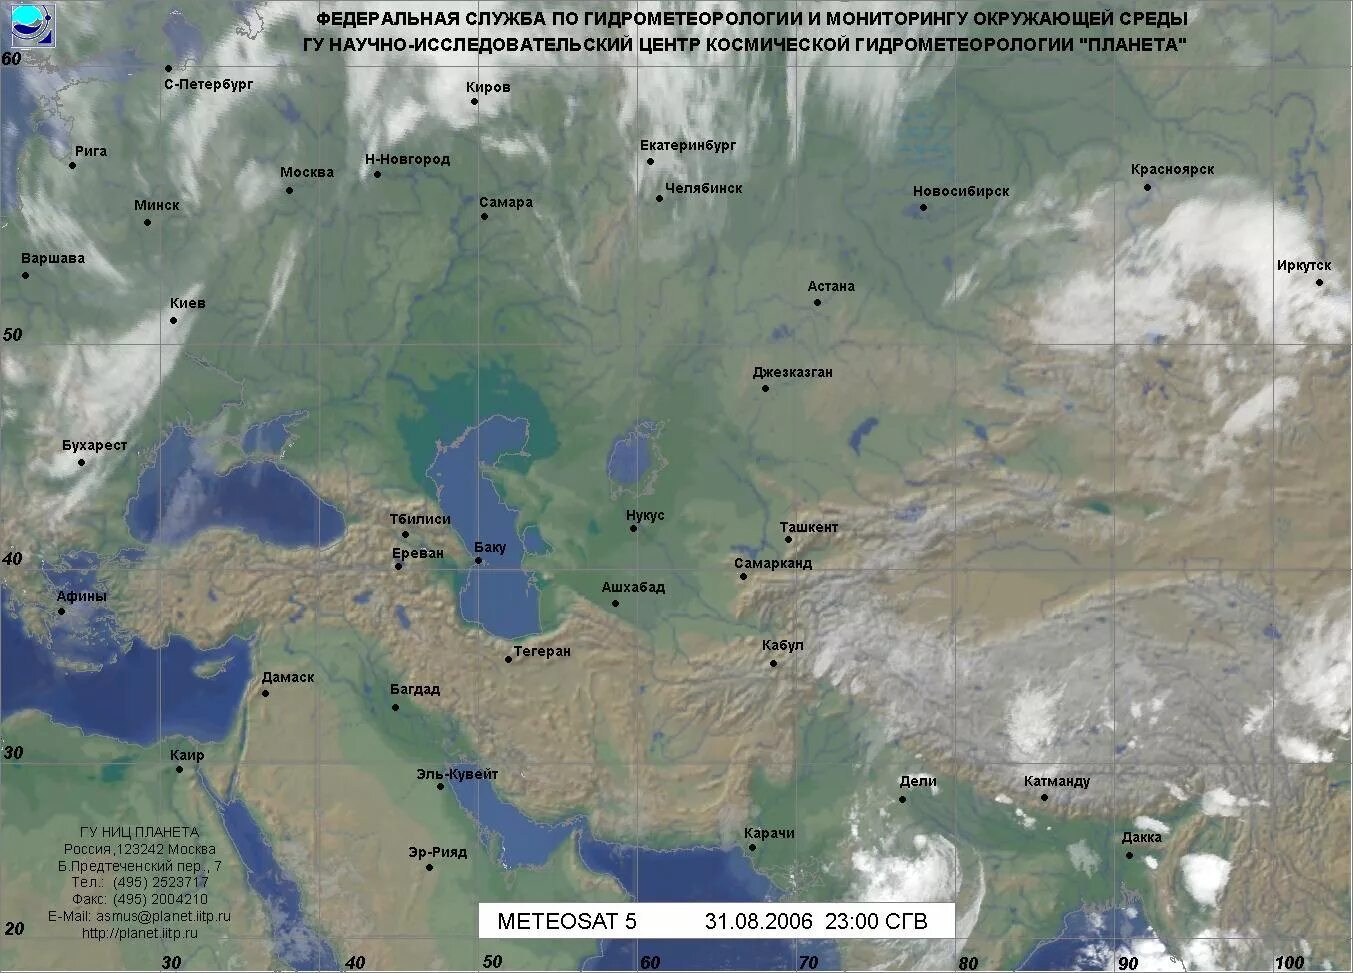 Иркутск астана. Облачность на карте. Карта облачности России. Облачность в России.